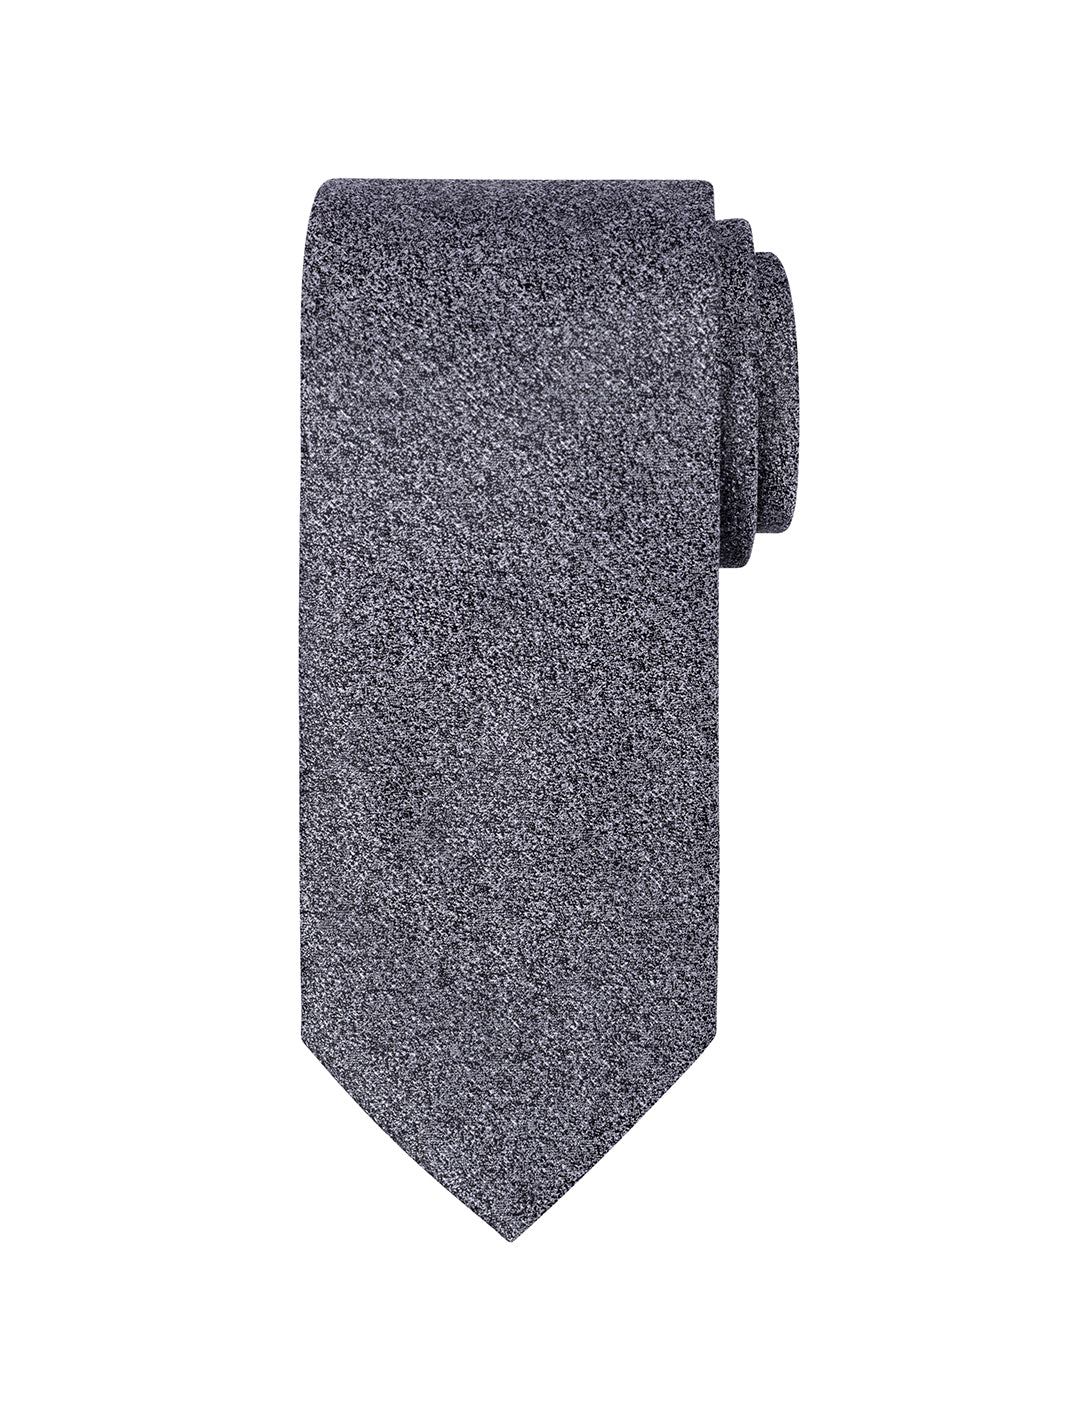 Speckle Tie in Grey